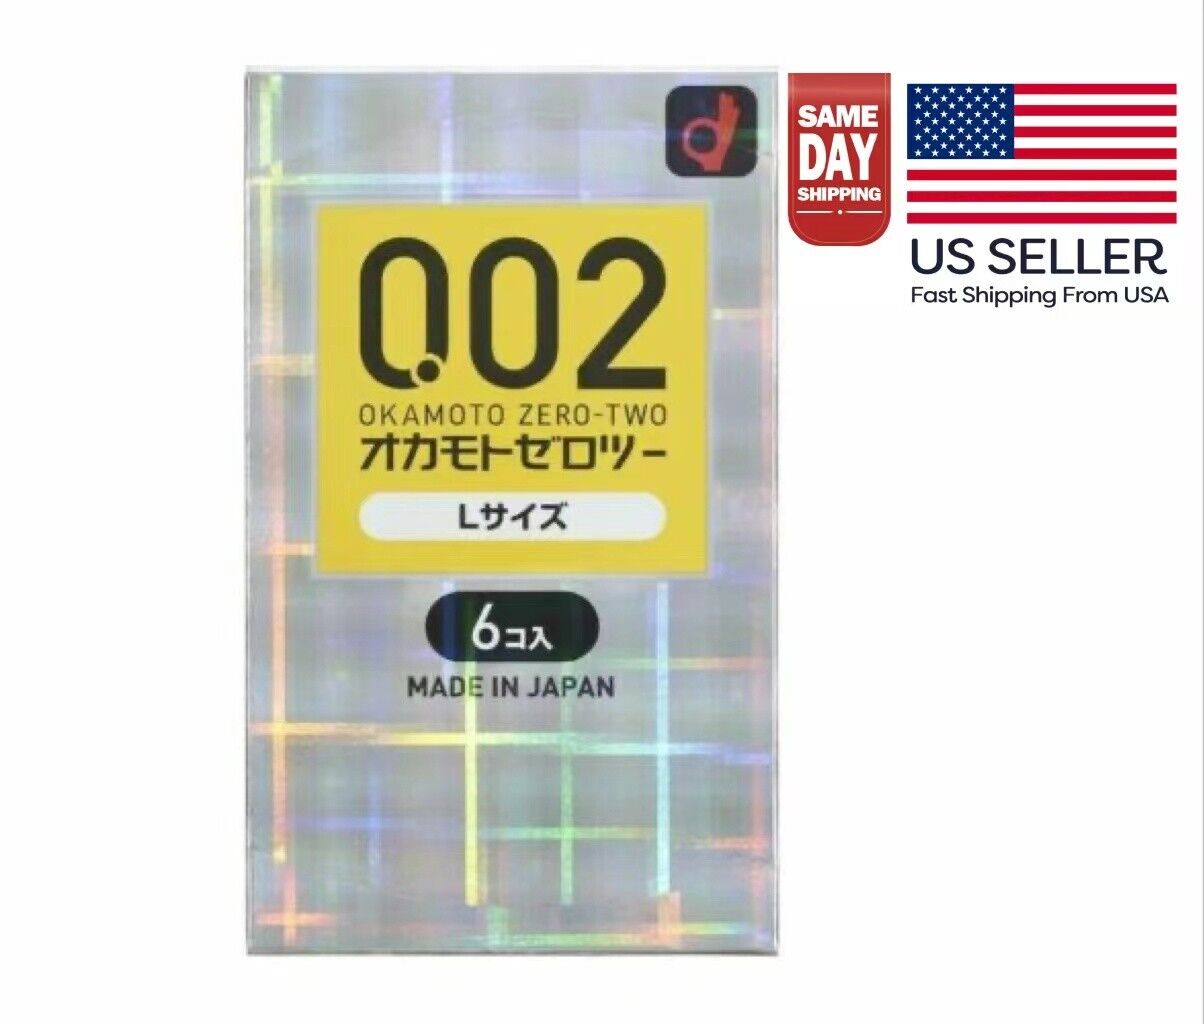 Okamoto 002Ex L Size Large Polyurethane Condoem 6Pcs Made In Japan-US Seller